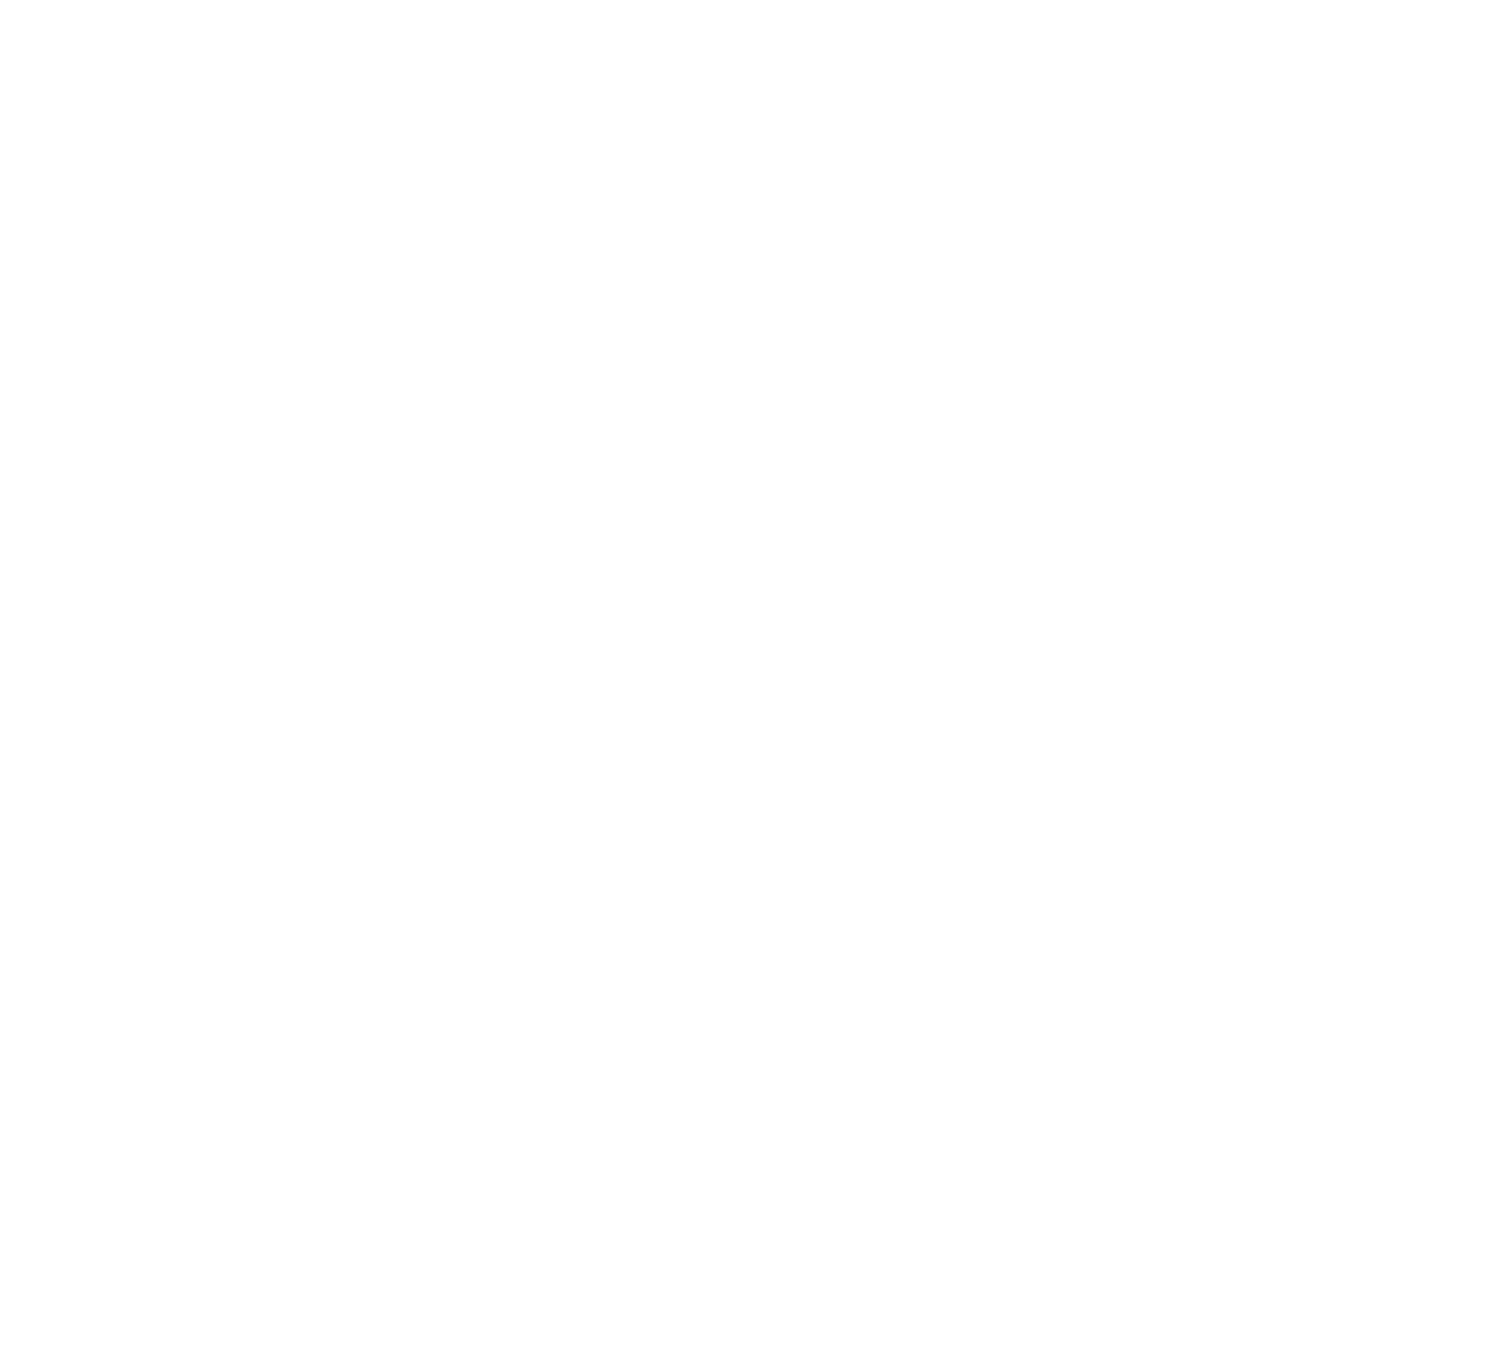 Urban Ocean Lab